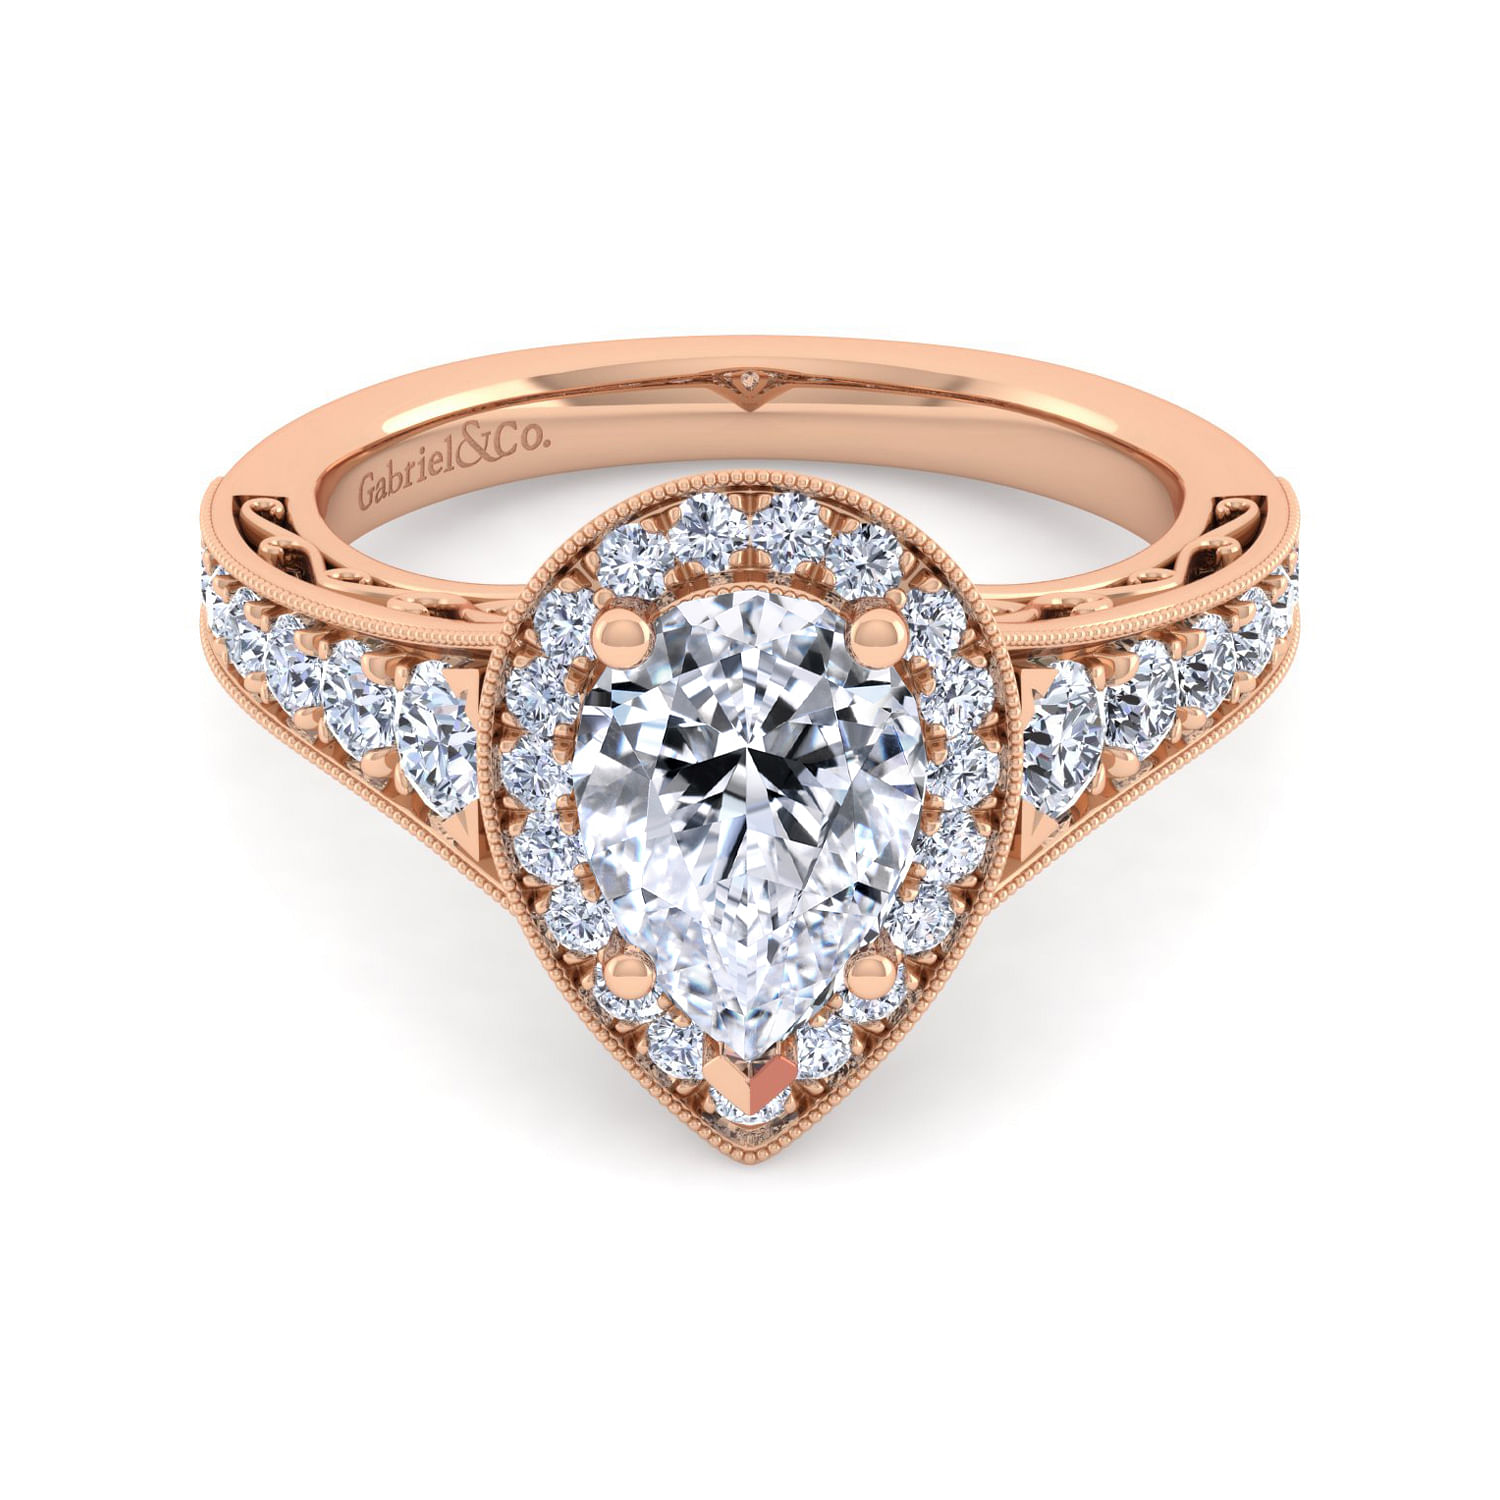 Vintage Inspired 14K Rose Gold Pear Shape Halo Diamond Engagement Ring